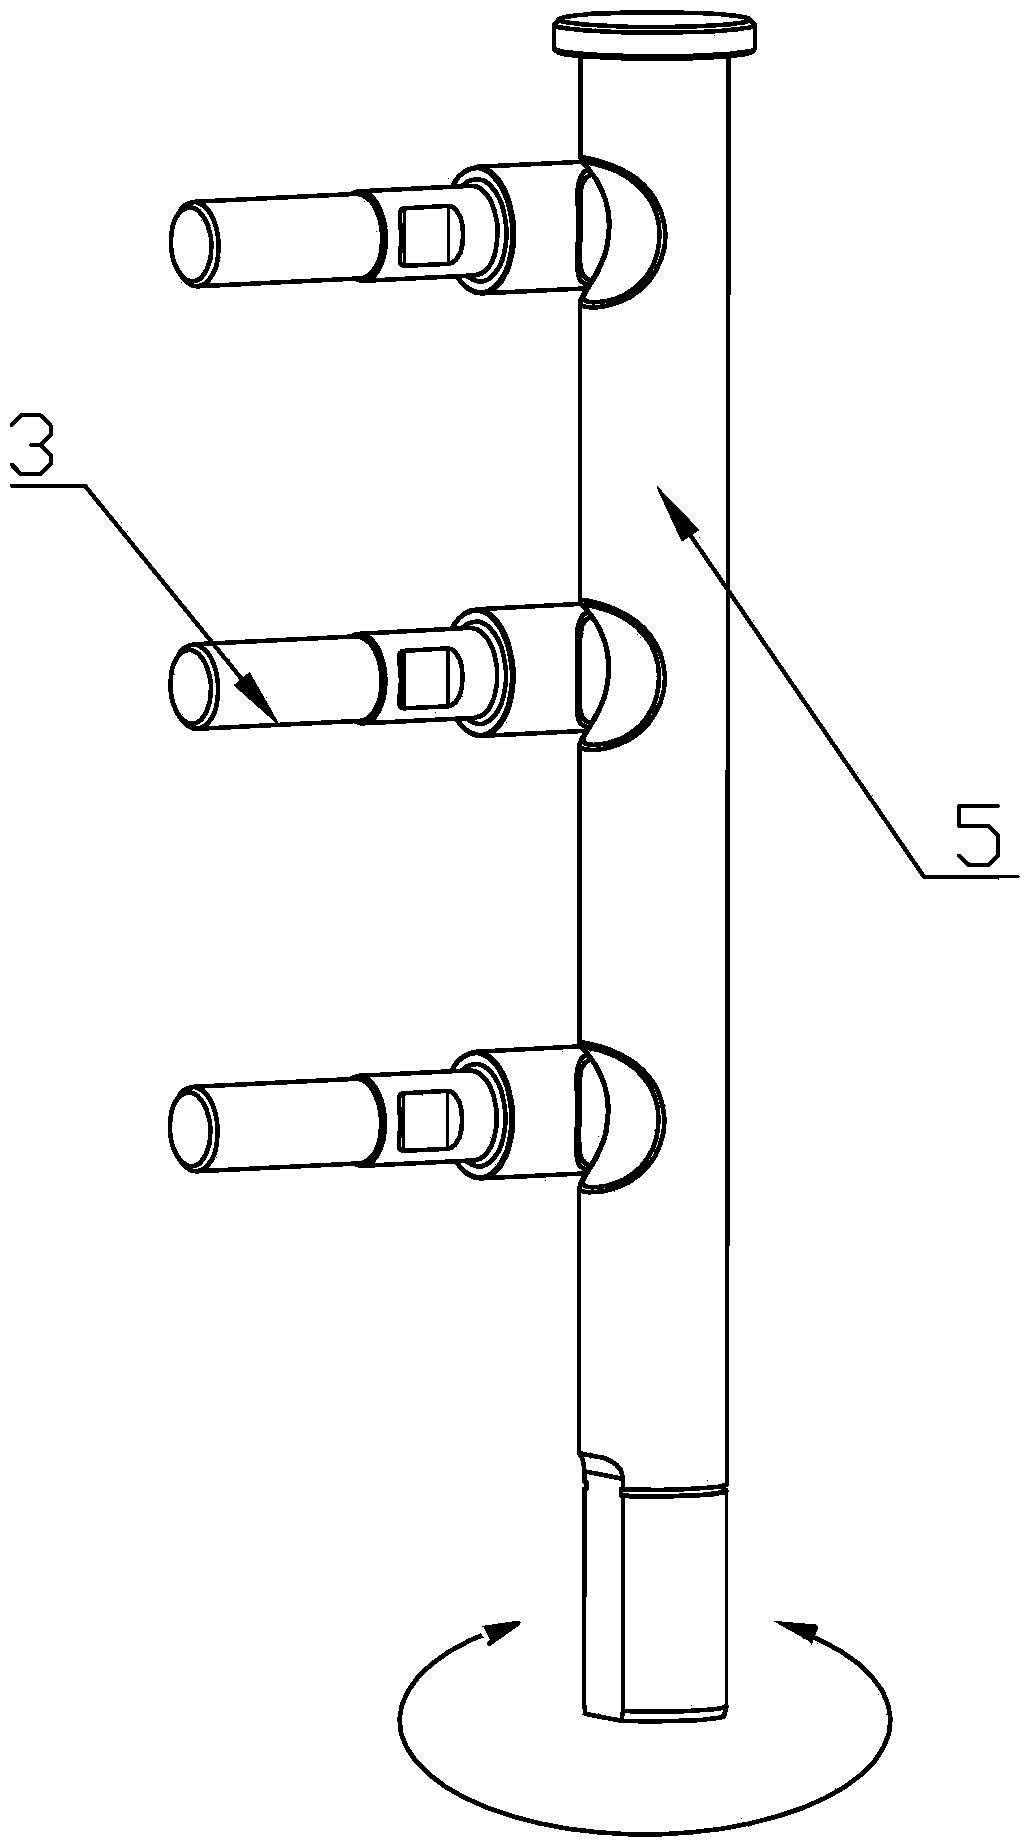 Rotation type mold locking mechanism